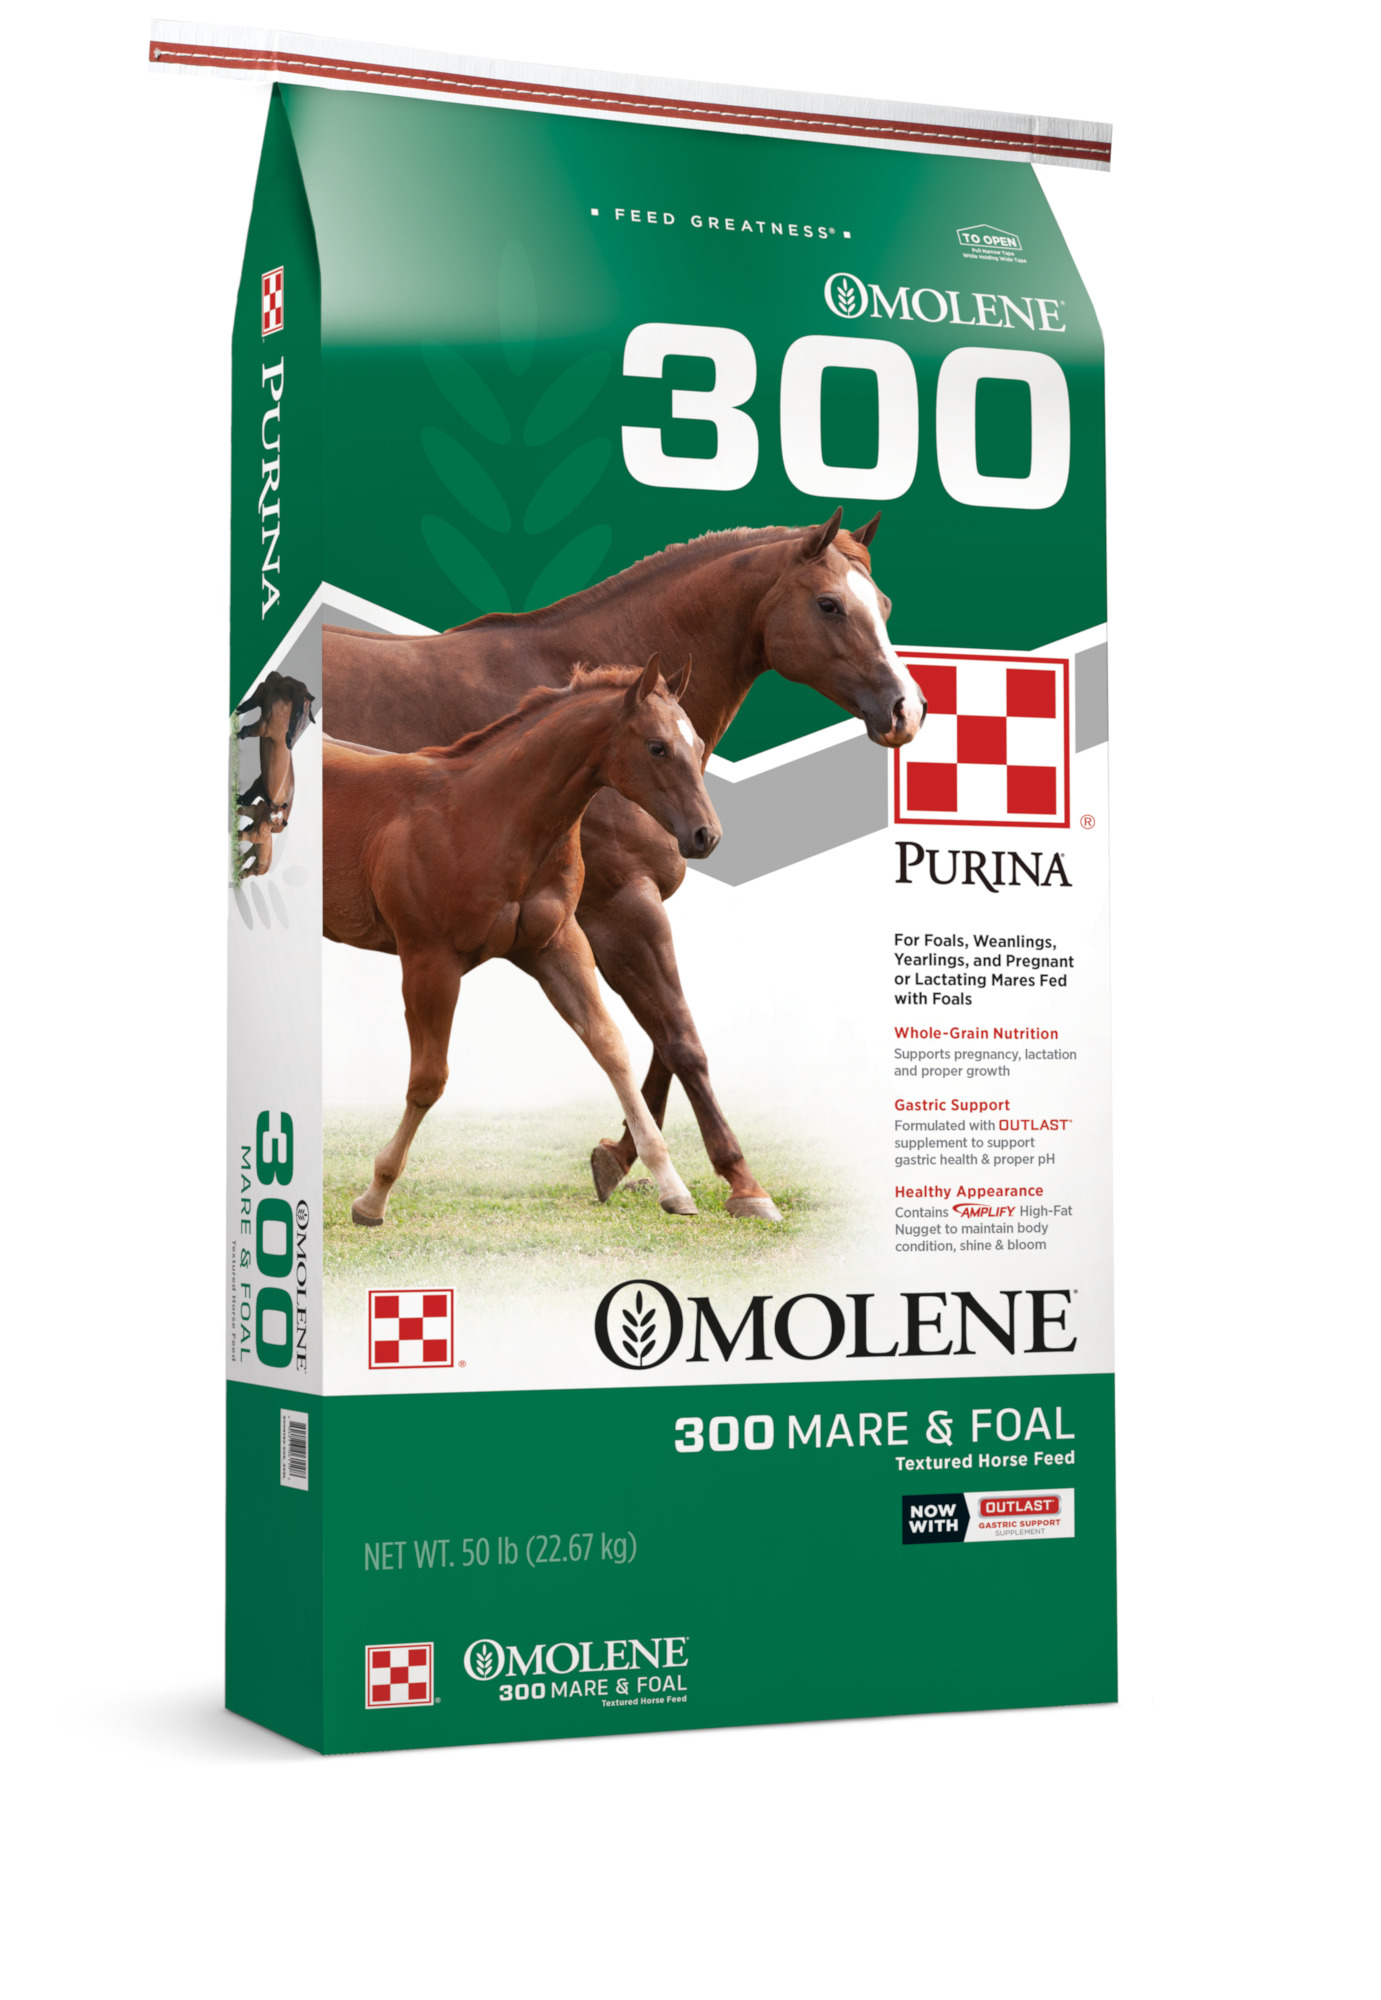 Purina&reg; Omolene #300&reg; Growth Horse Feed, 50 lbs